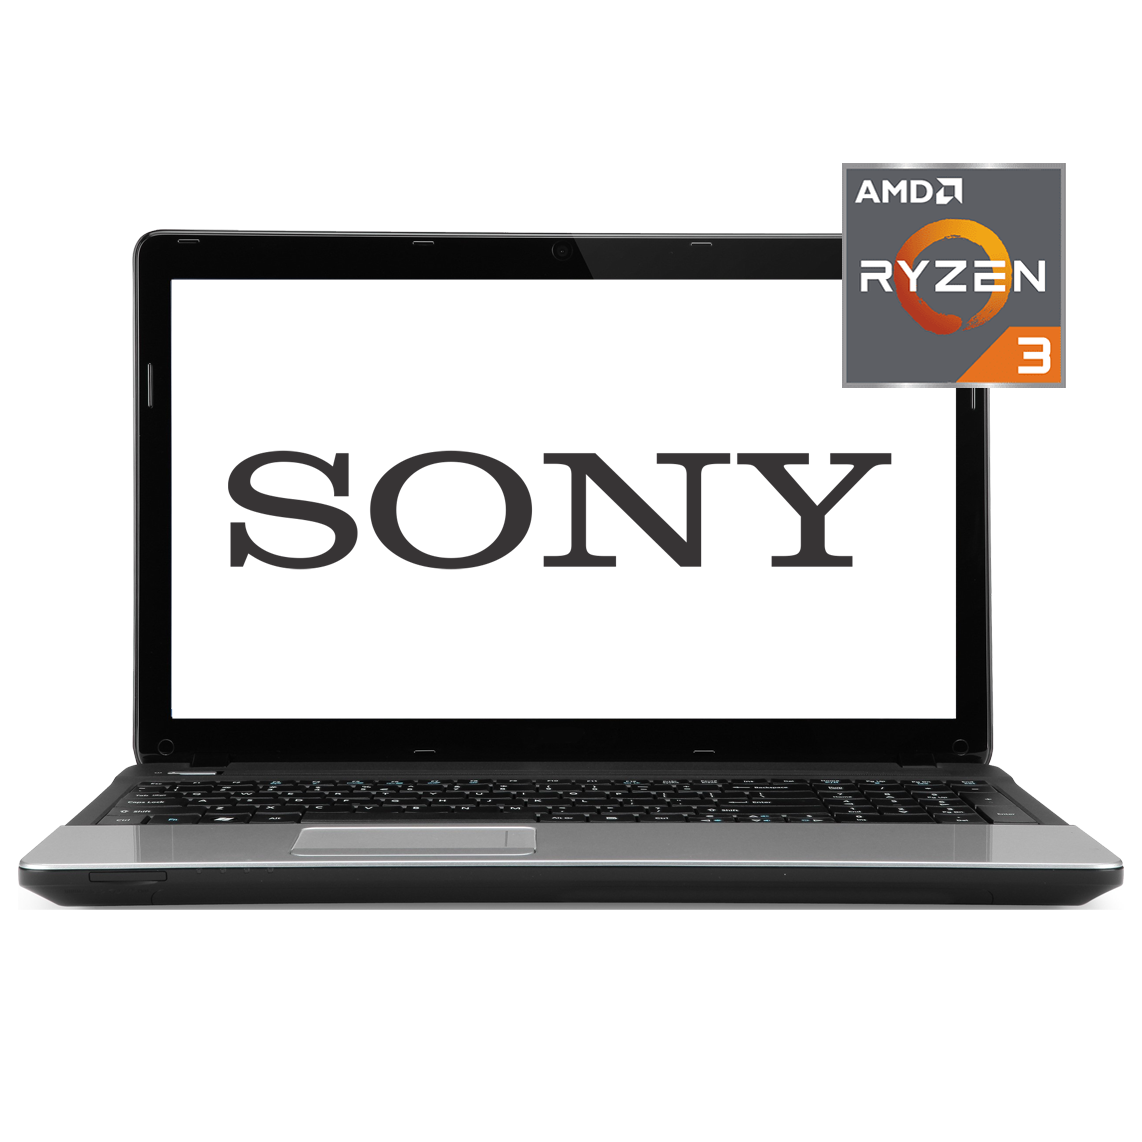 Sony - 15.6 inch AMD Ryzen 3